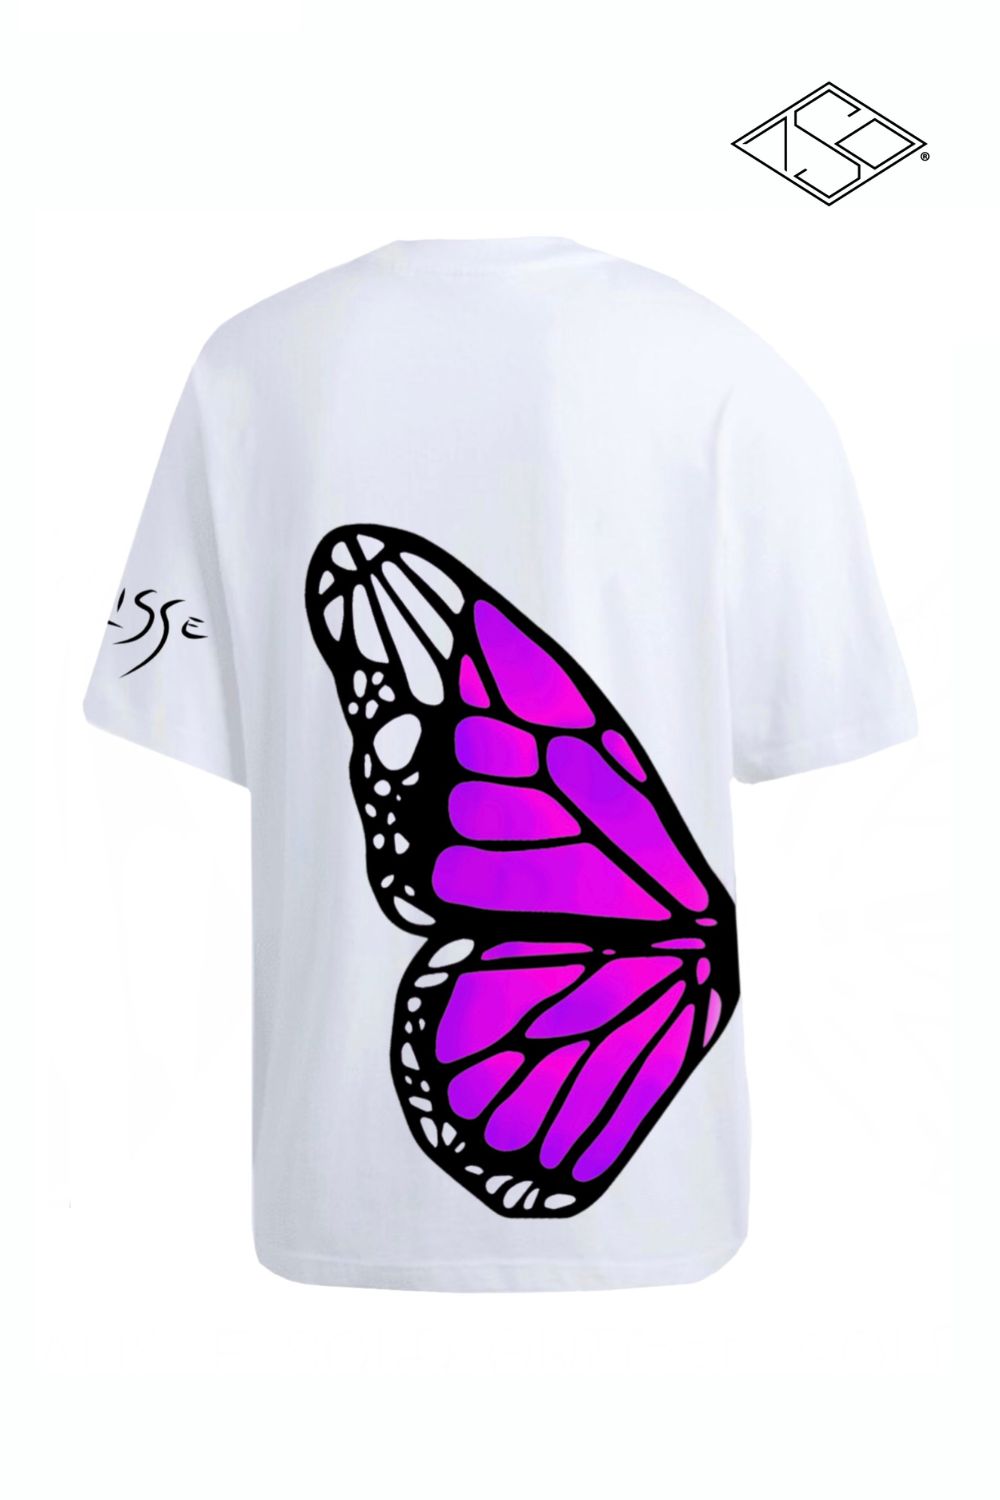 ButterflyEffectT-ShirtbyApocalisseSoldOut_rendering back